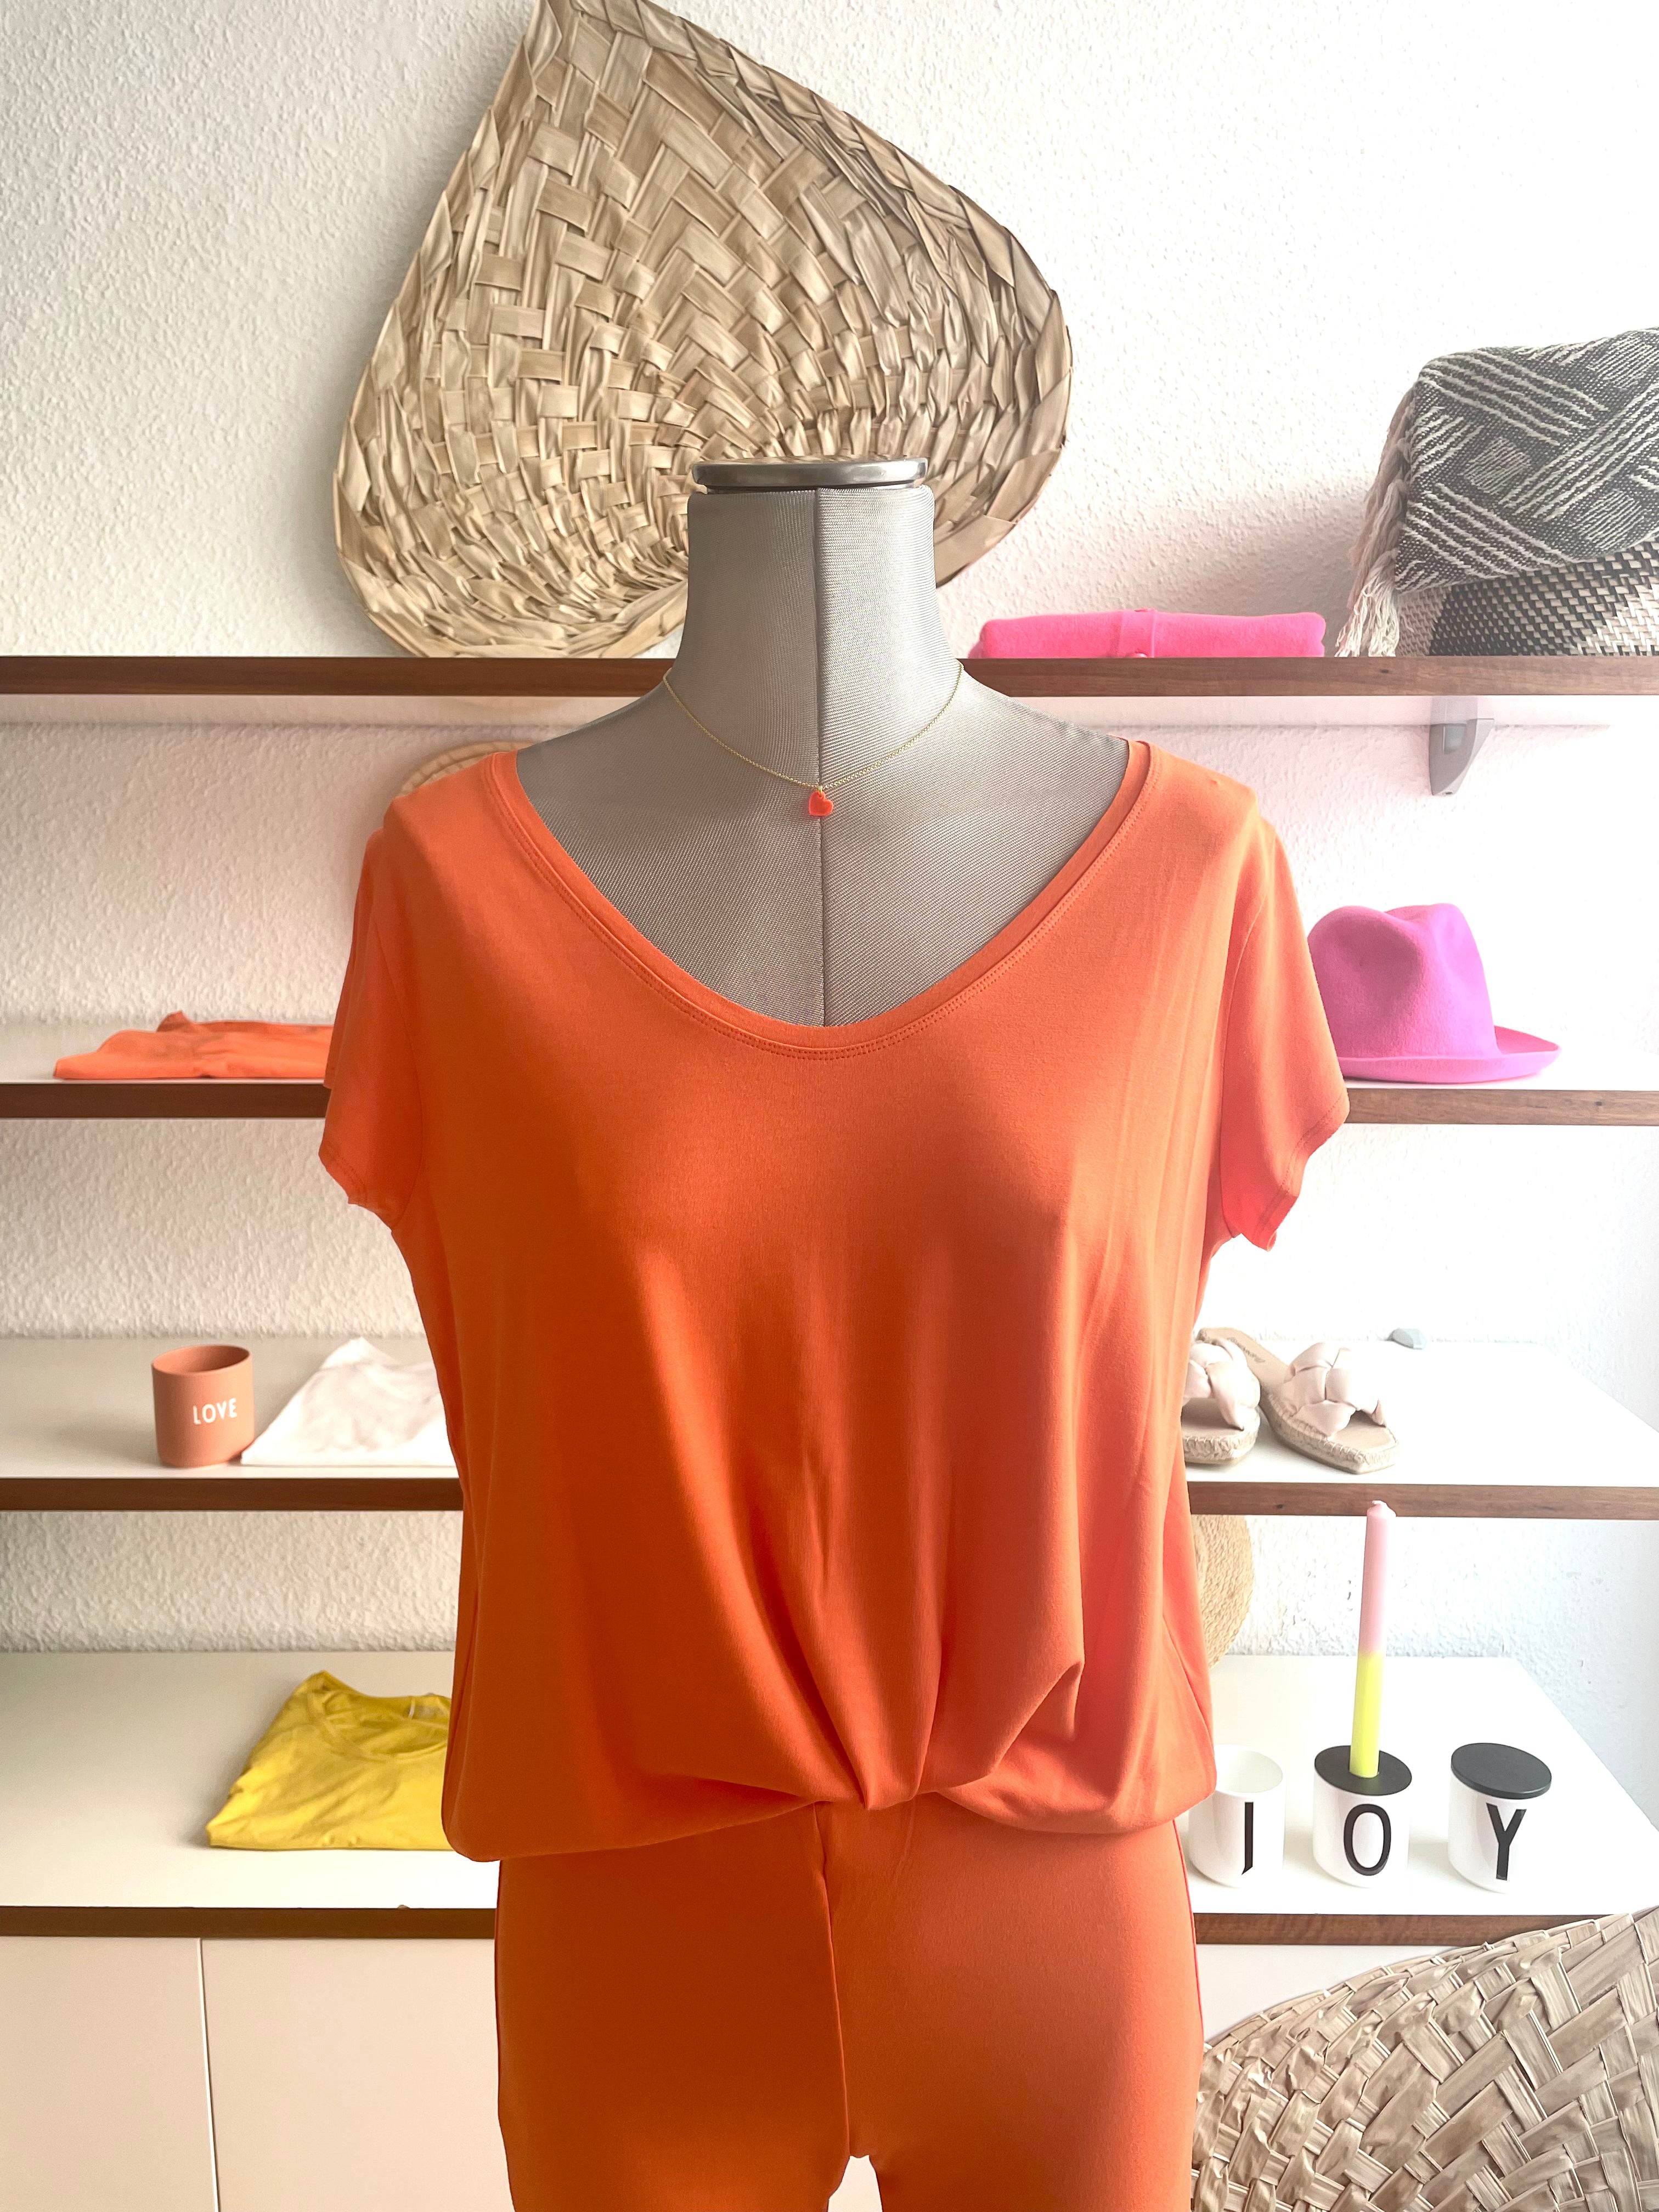 AURYN - Bambus T-Shirt orange, fair produziert